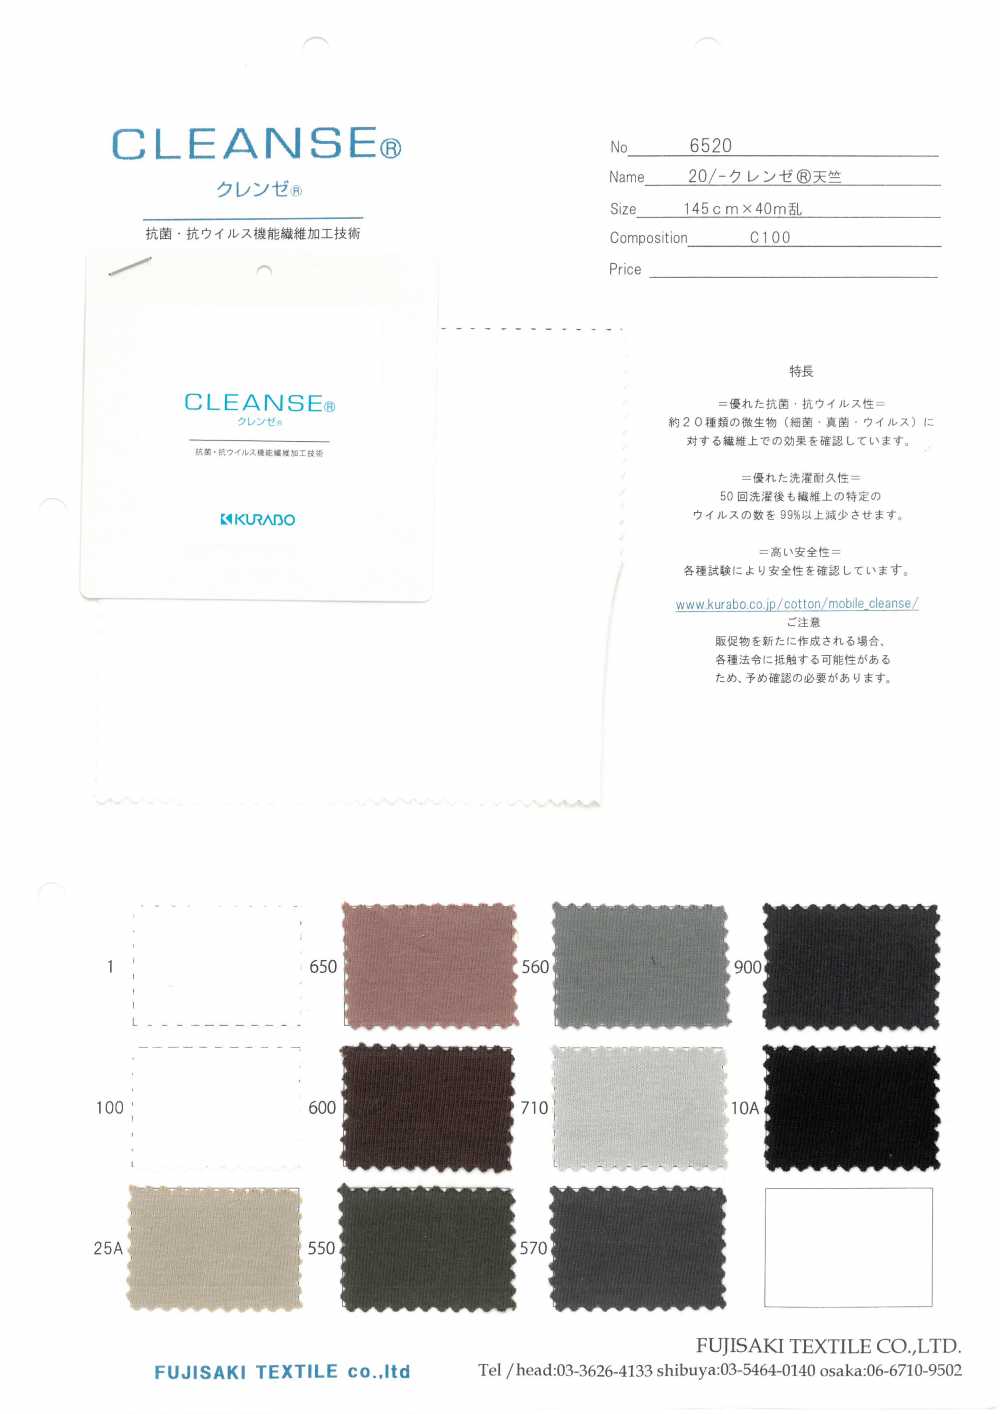 6520 20 / CLEANSE Cotone Tianzhu[Tessile / Tessuto] Fujisaki Textile